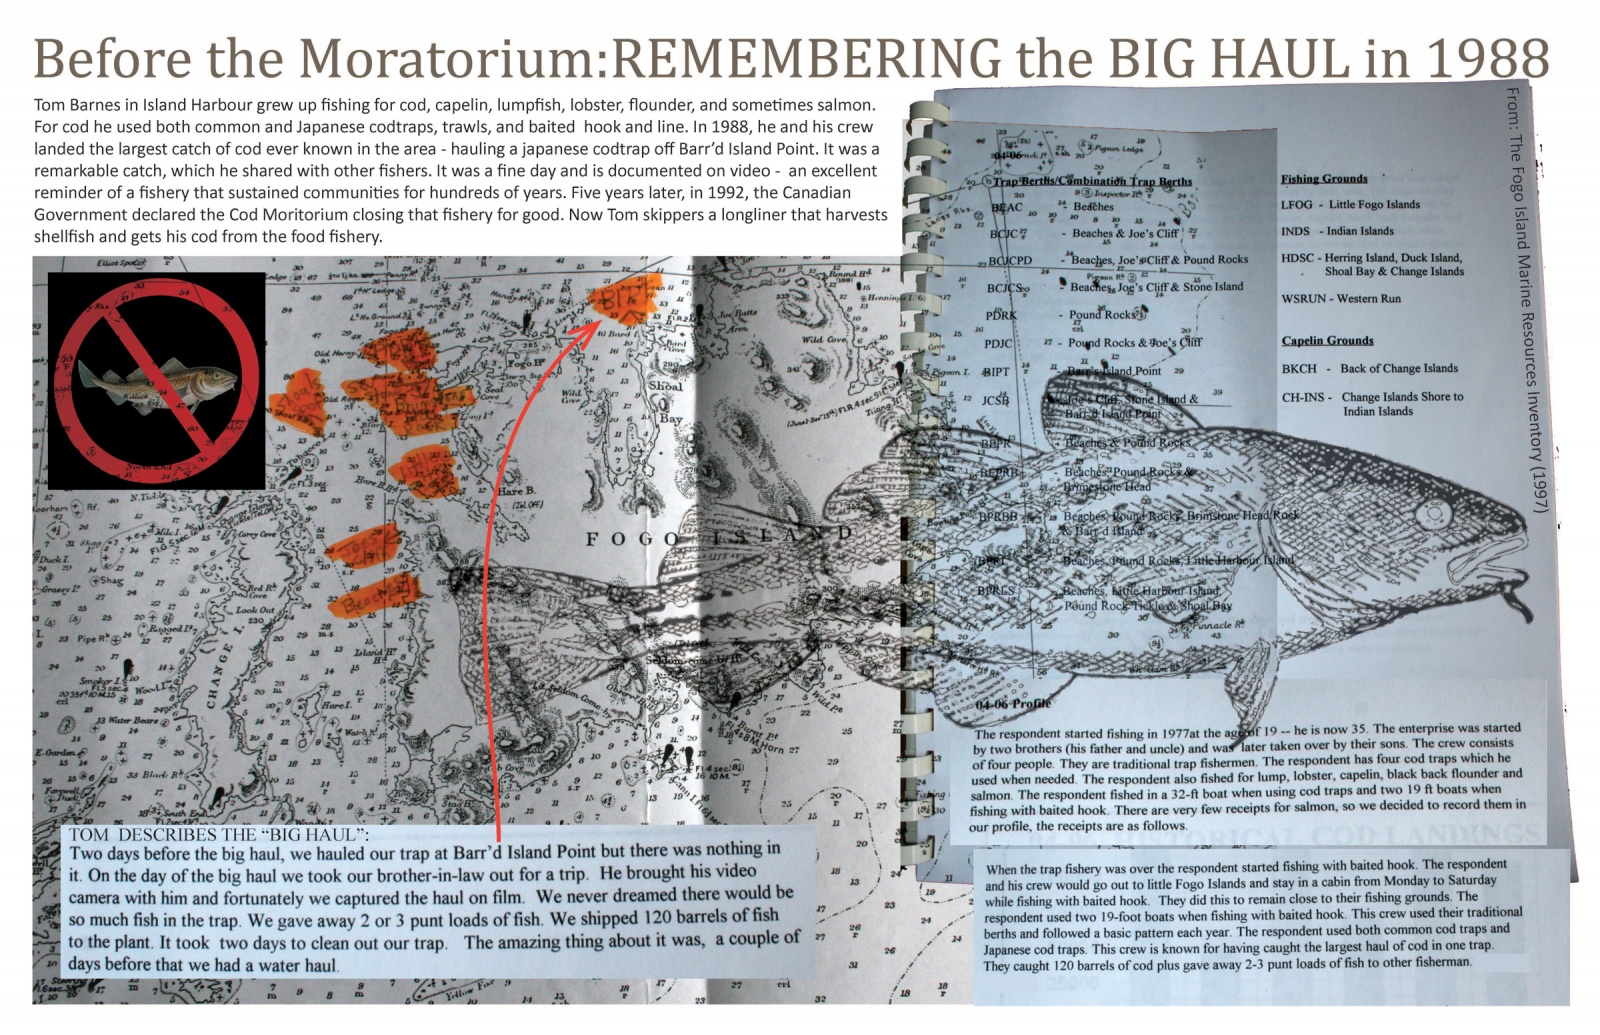 Before the Moratorium: Remembering the Big Haul in 1988